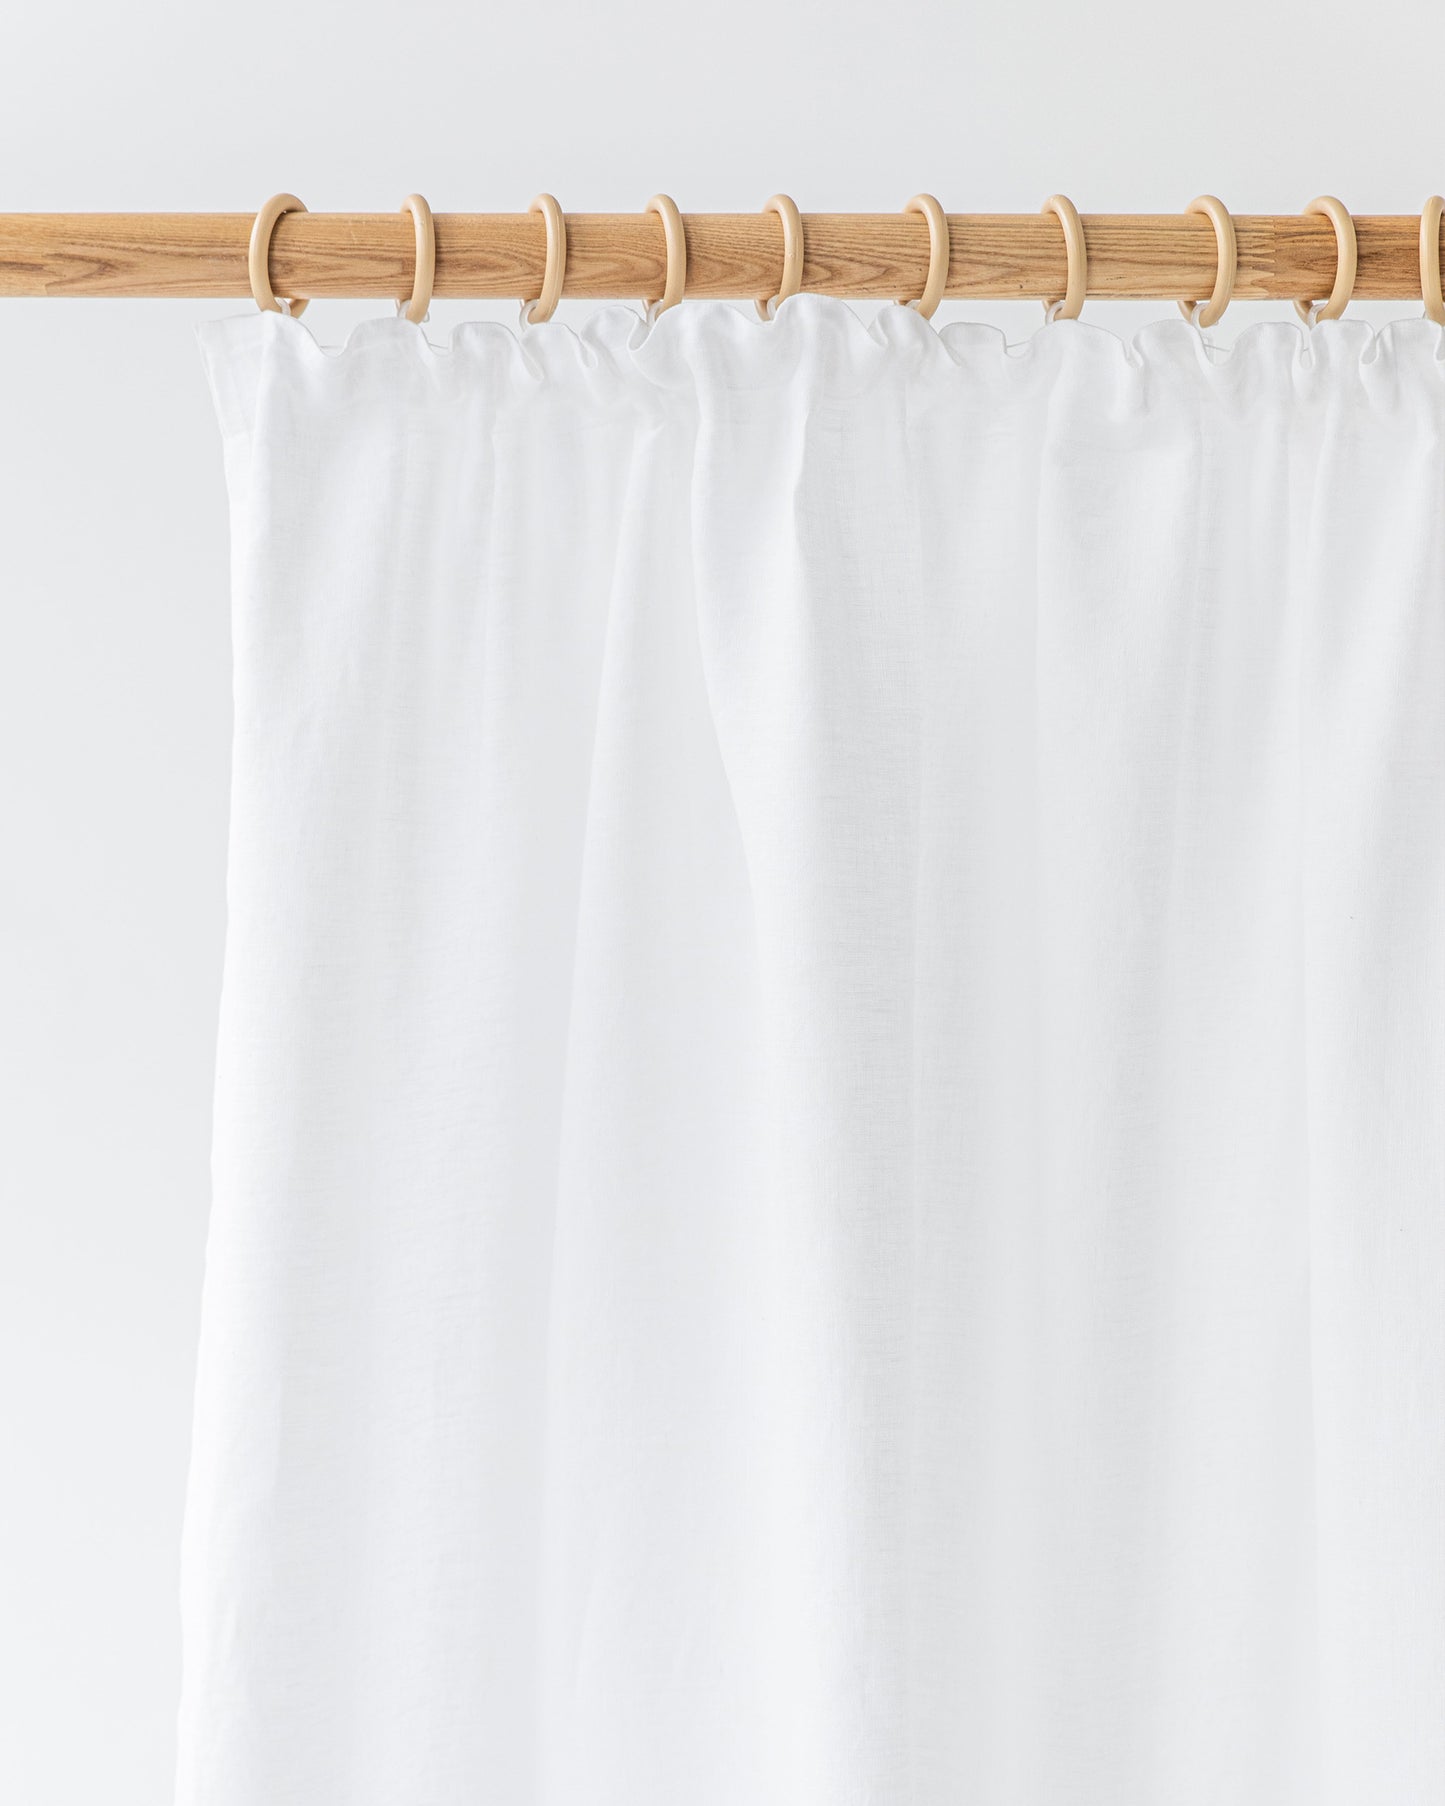 Pencil pleat linen curtain panel (1 pcs) in White - MagicLinen